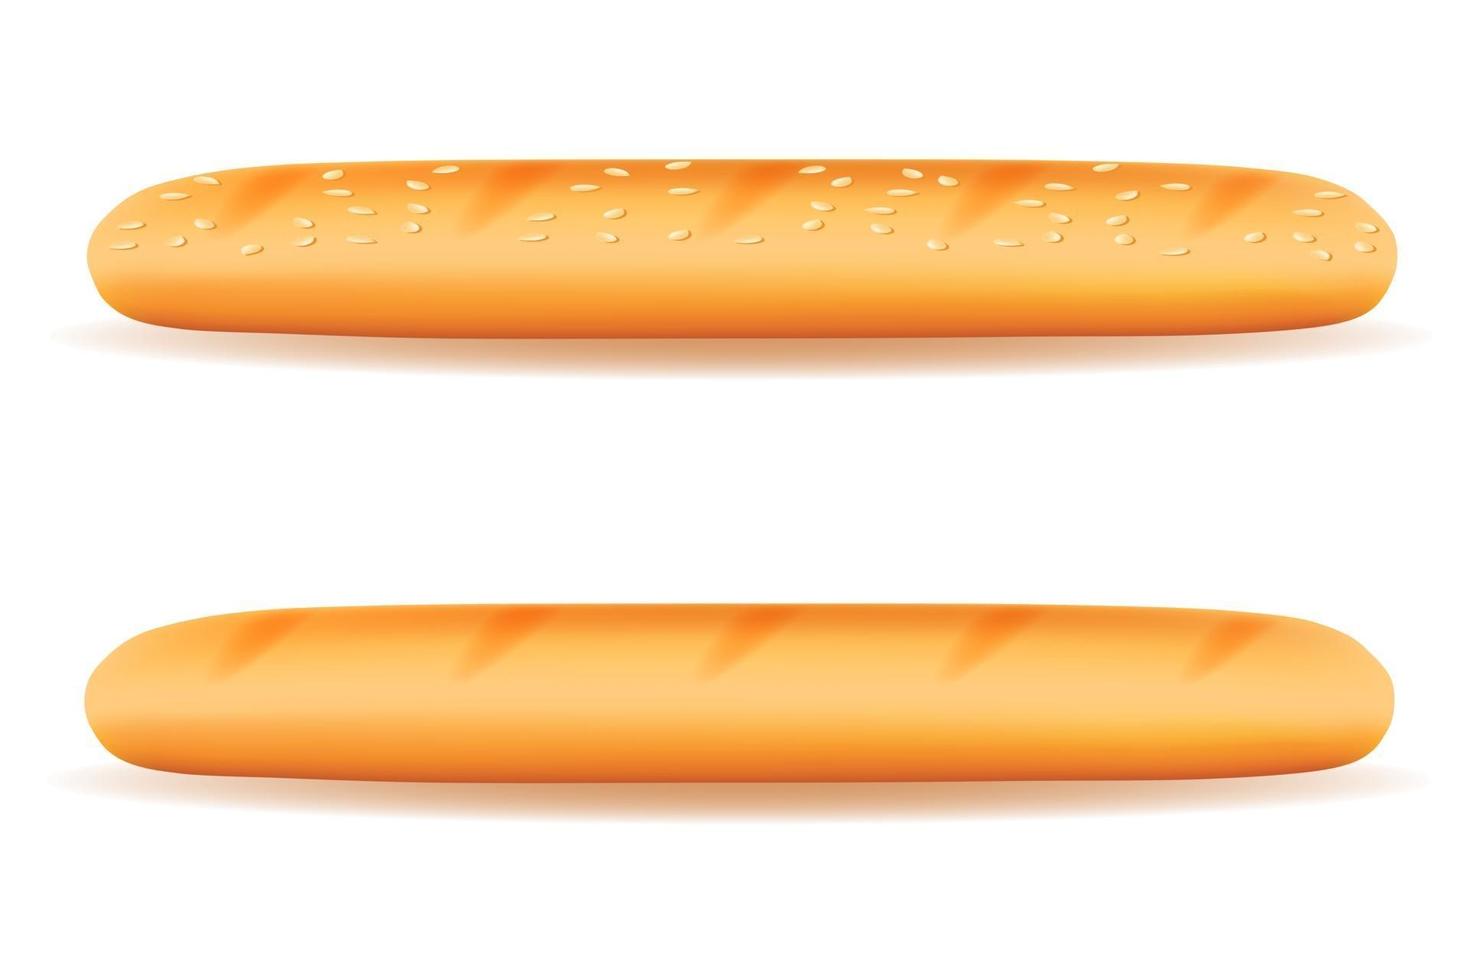 hot dog bun sausage vector illustration isolated on white background